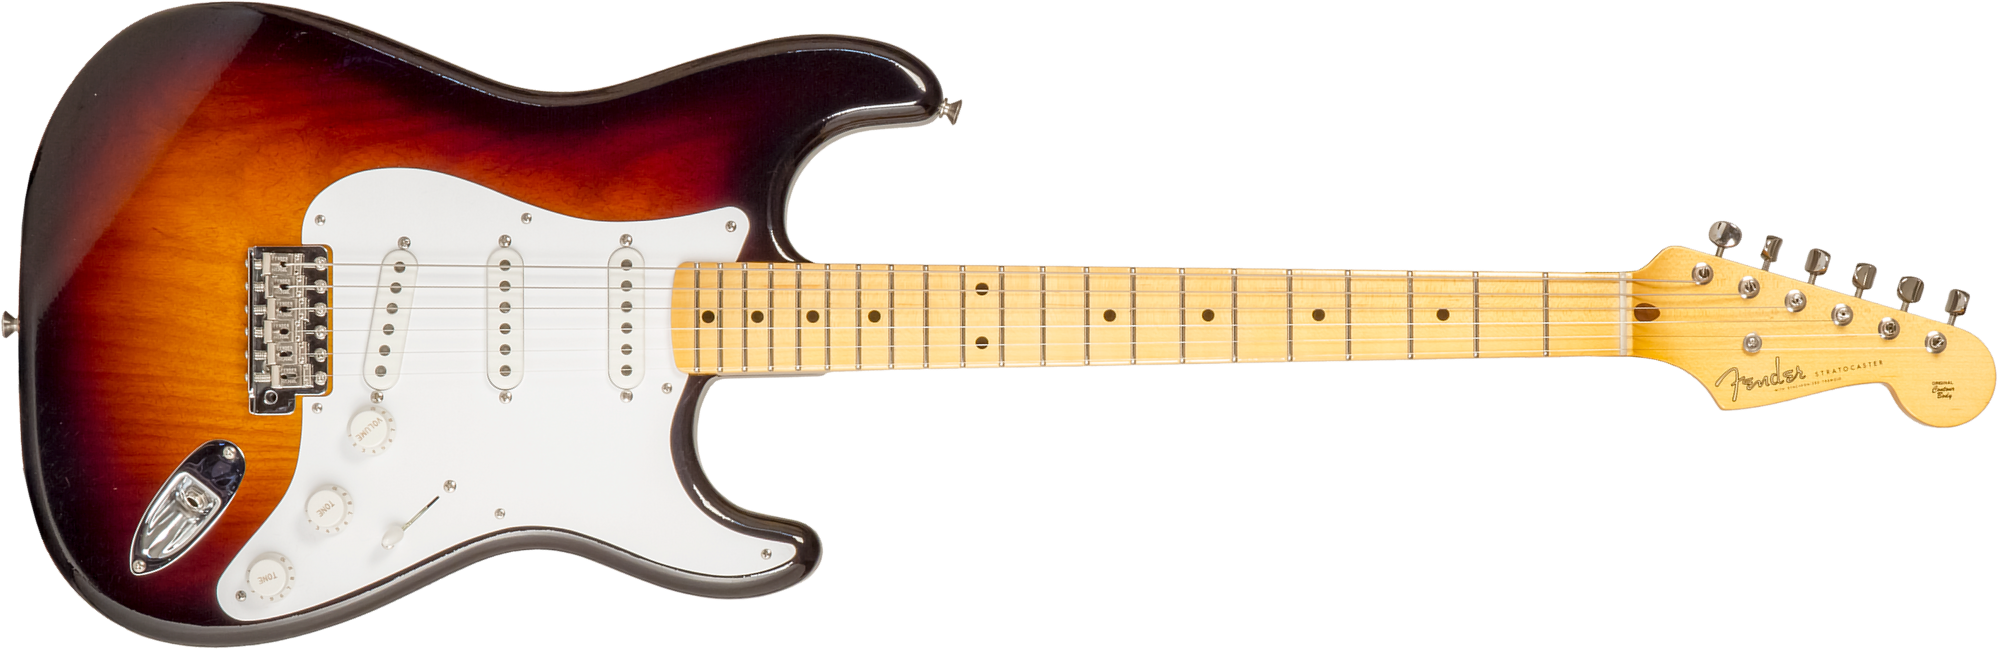 Fender Custom Shop Strat 1954 70th Anniv. 3s Trem Mn #xn4356 - Closet Classic Wide Fade 2-color Sunburst - Str shape electric guitar - Main picture